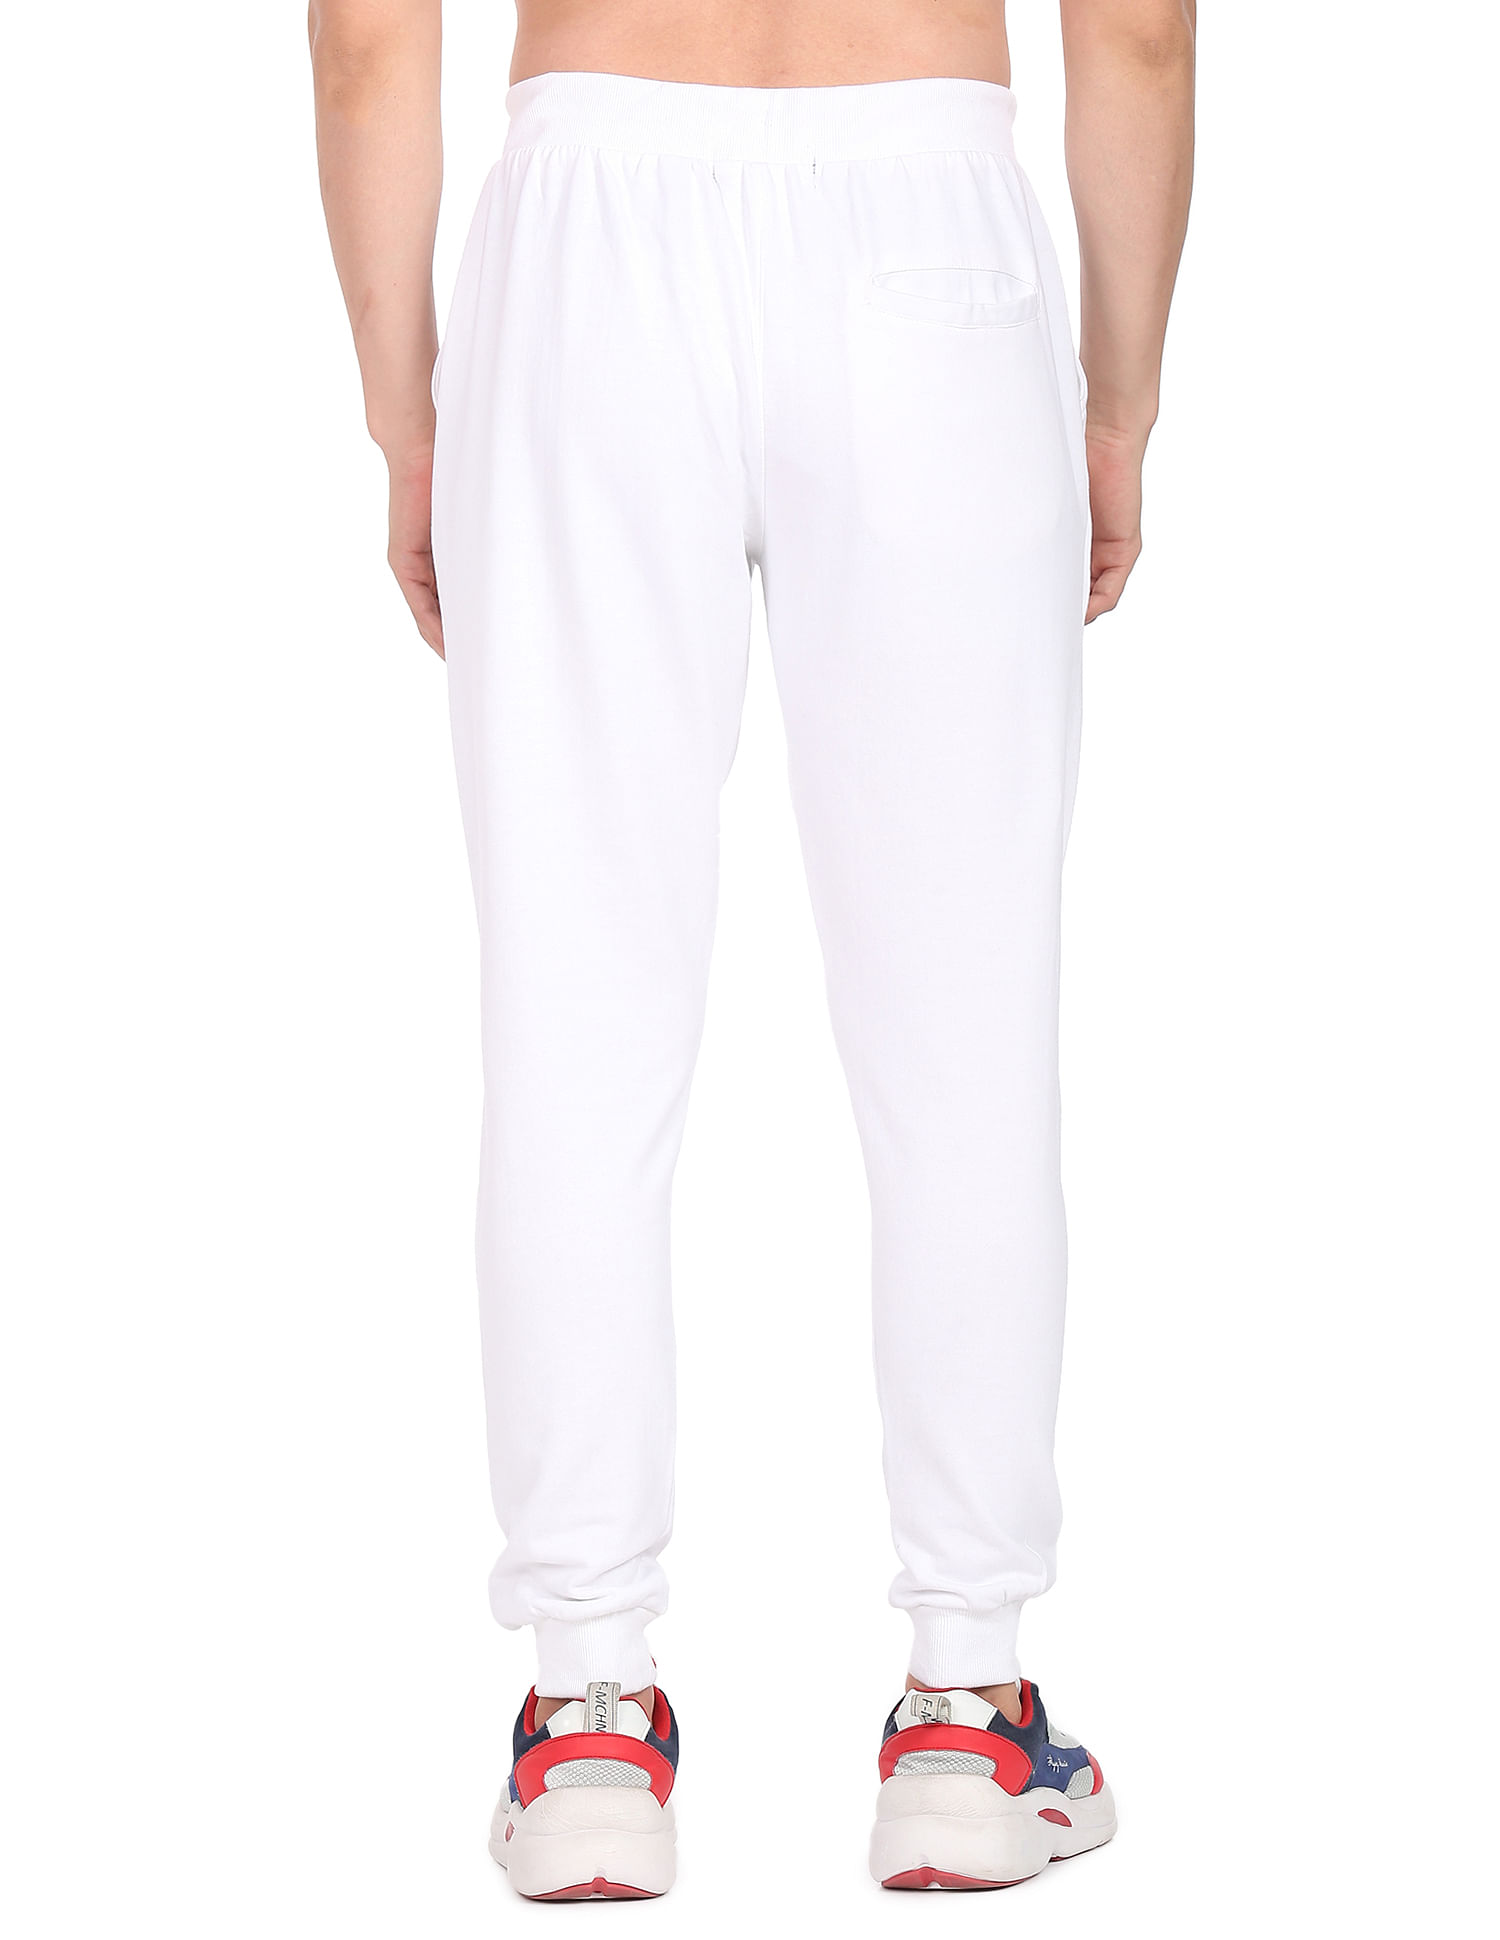 Nike Vaporwave Swoosh Woven Track Pants In White | ModeSens | Nike track  pants, White nikes, Track pants